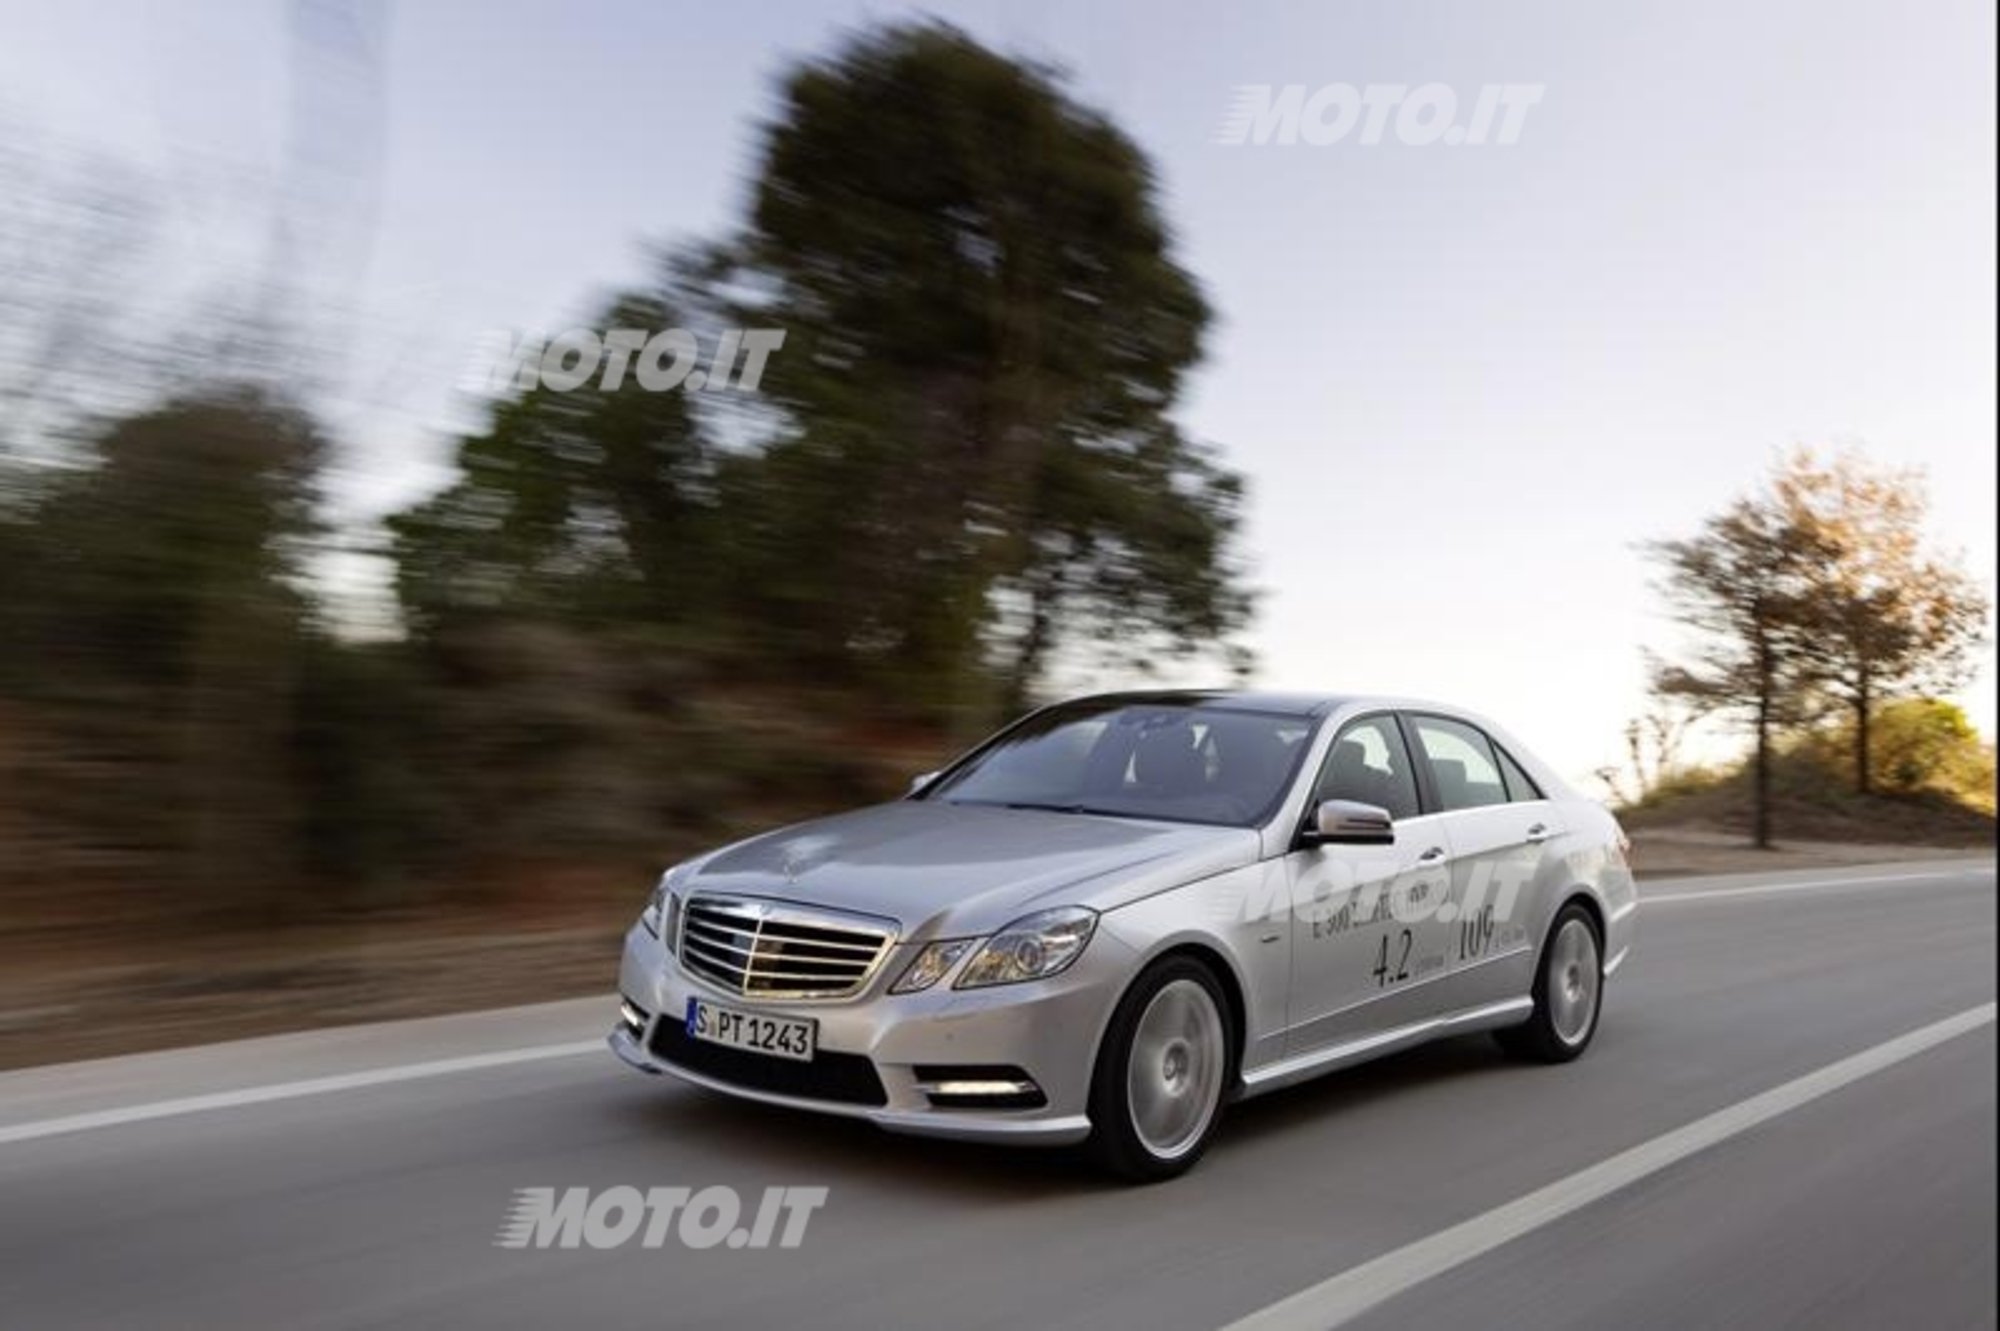 Mercedes-Benz Classe E BlueTEC Hybrid ad H2Roma